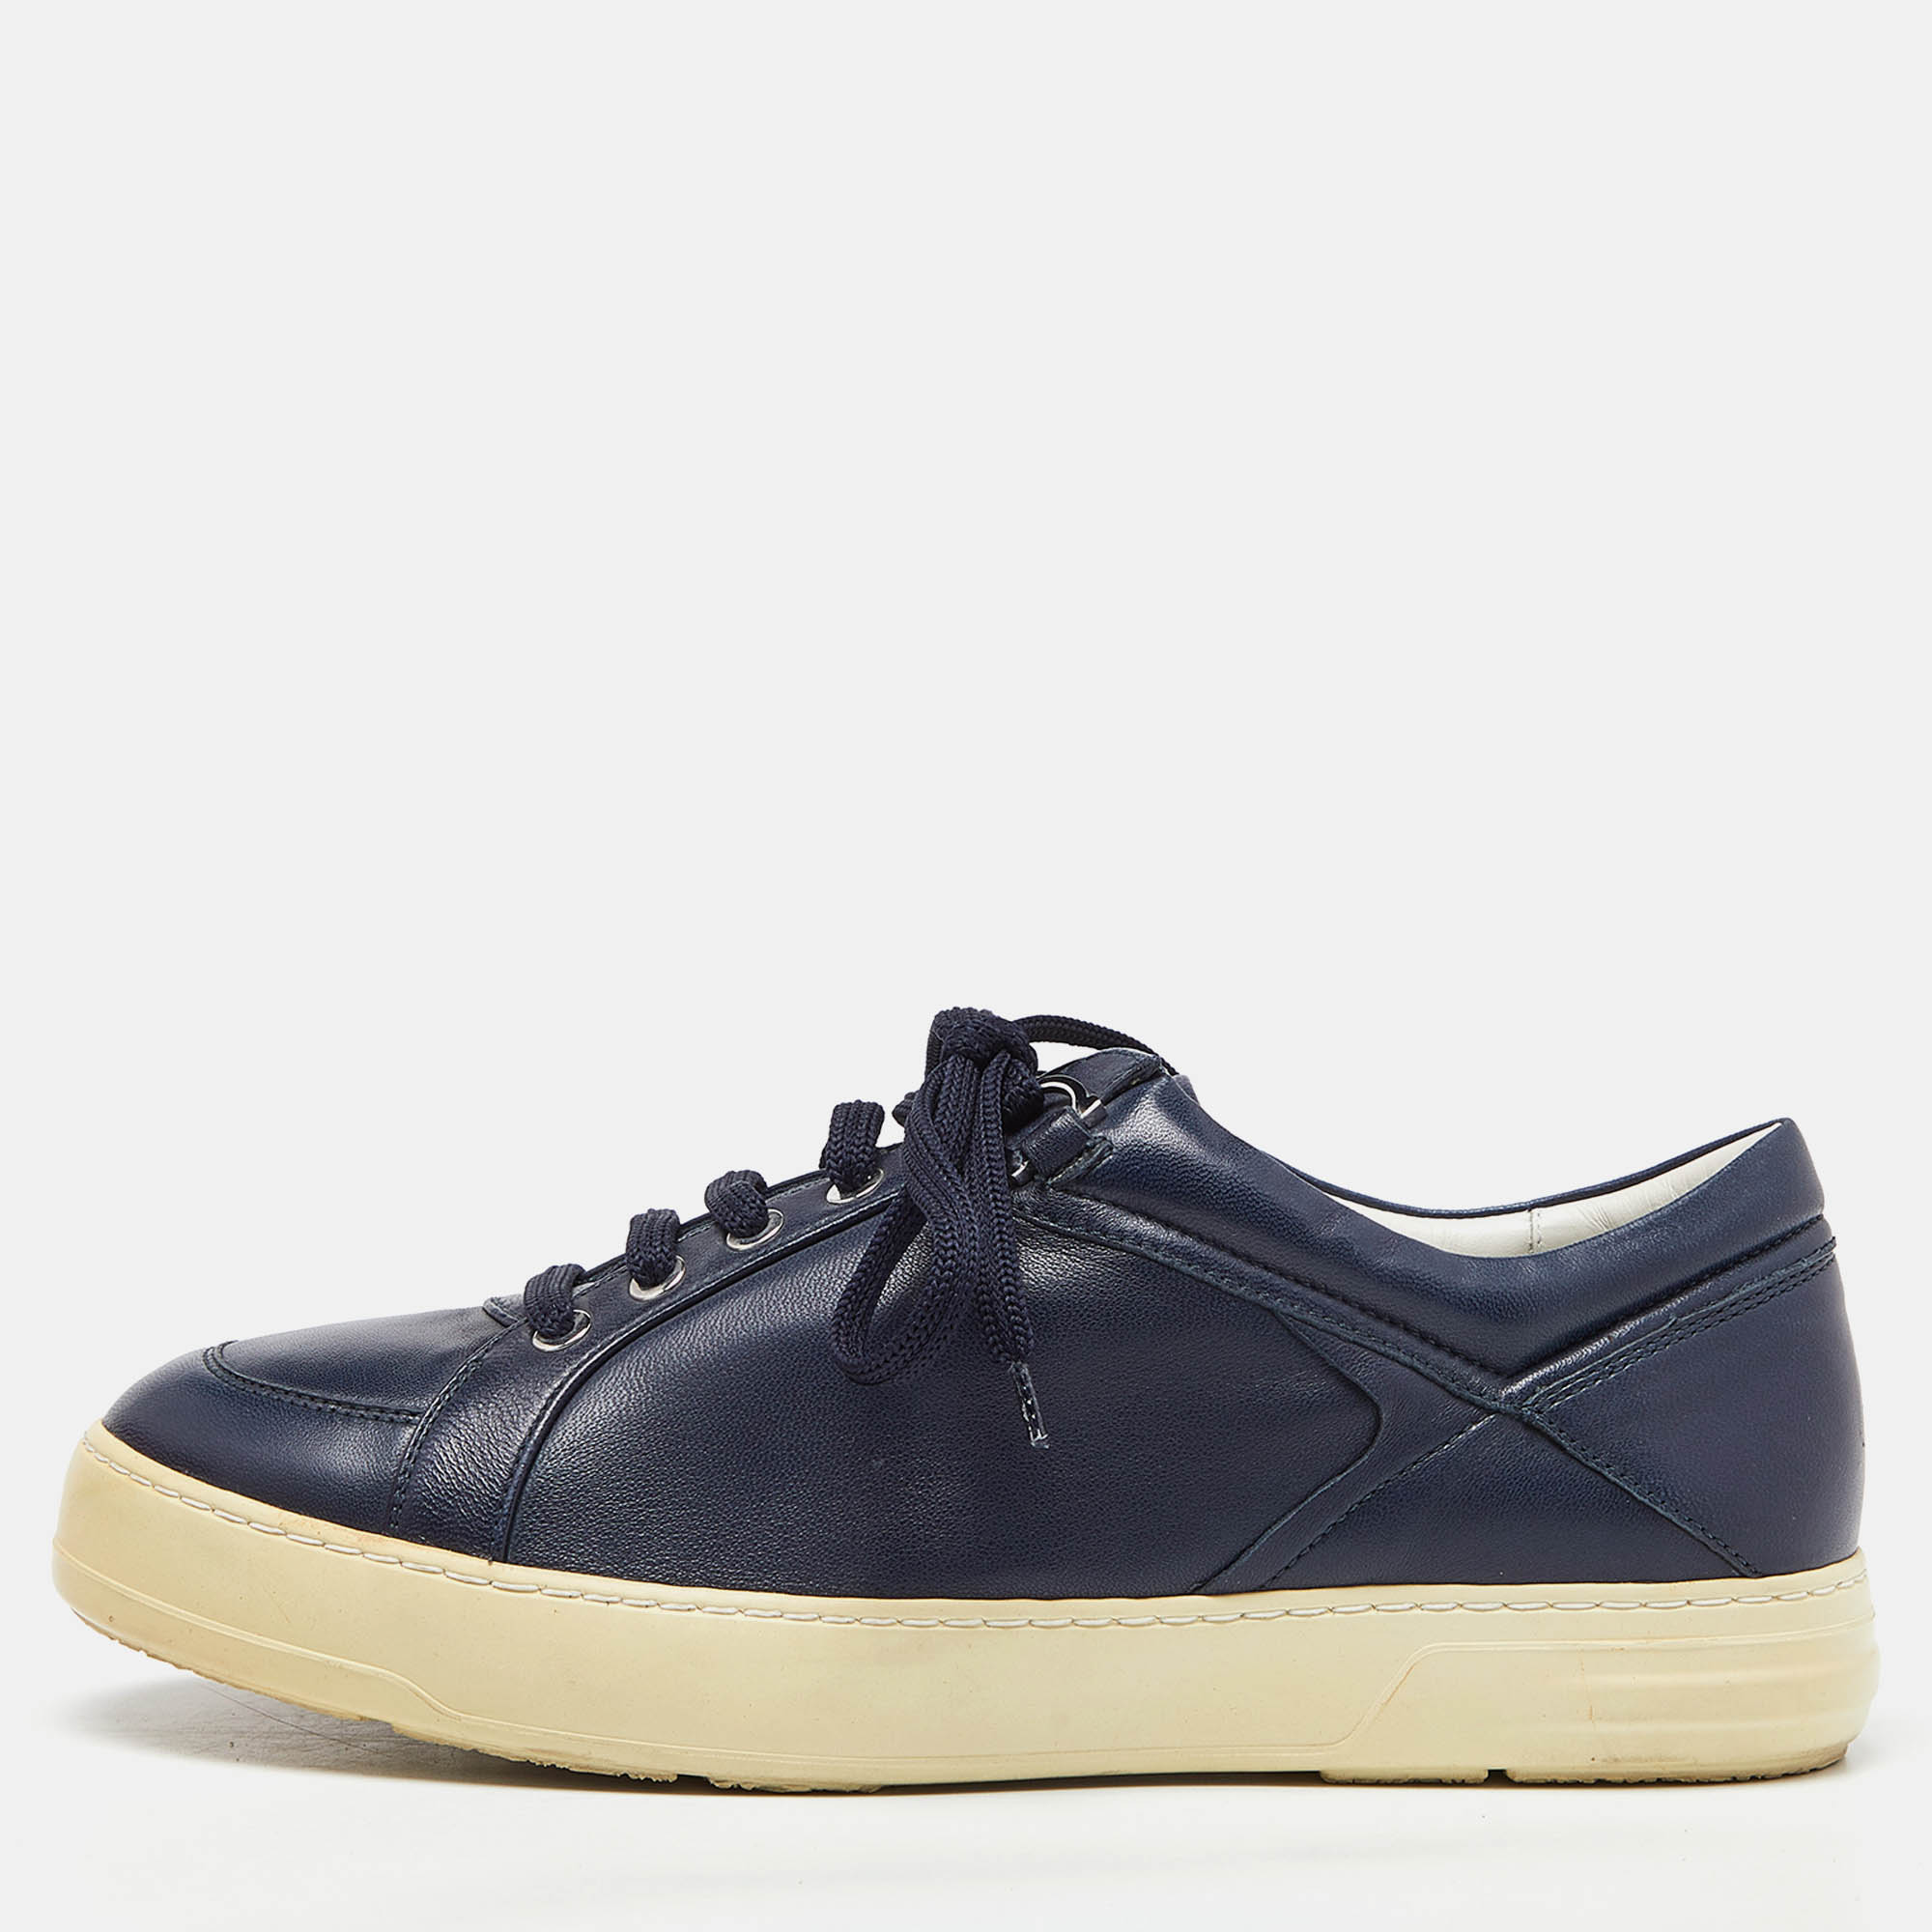 Salvatore Ferragamo Blue Leather Low Top Sneakers Size 41